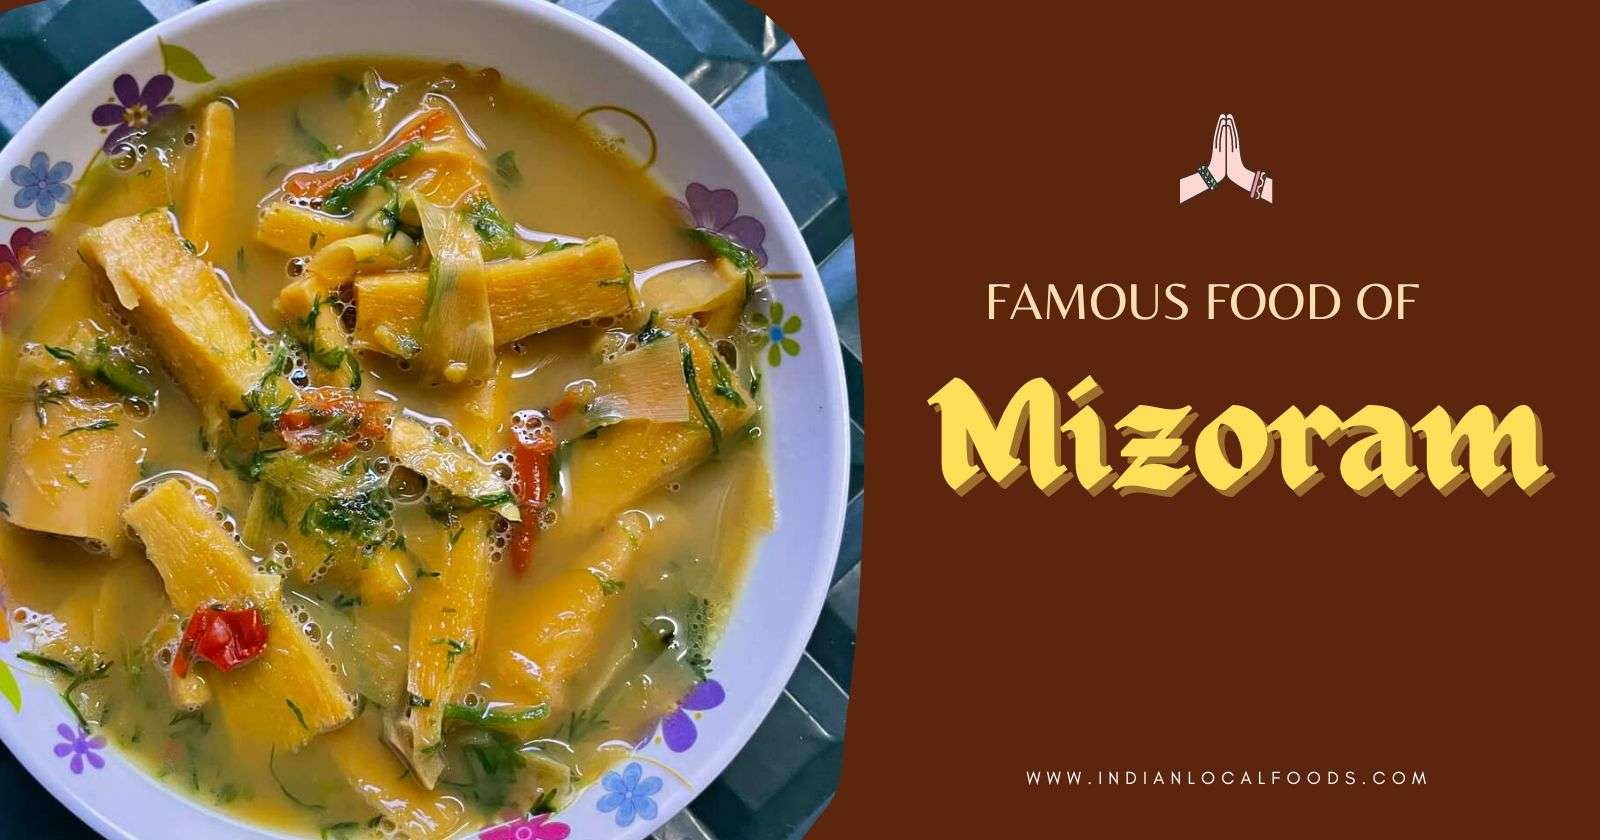 Famous food of Mizoram